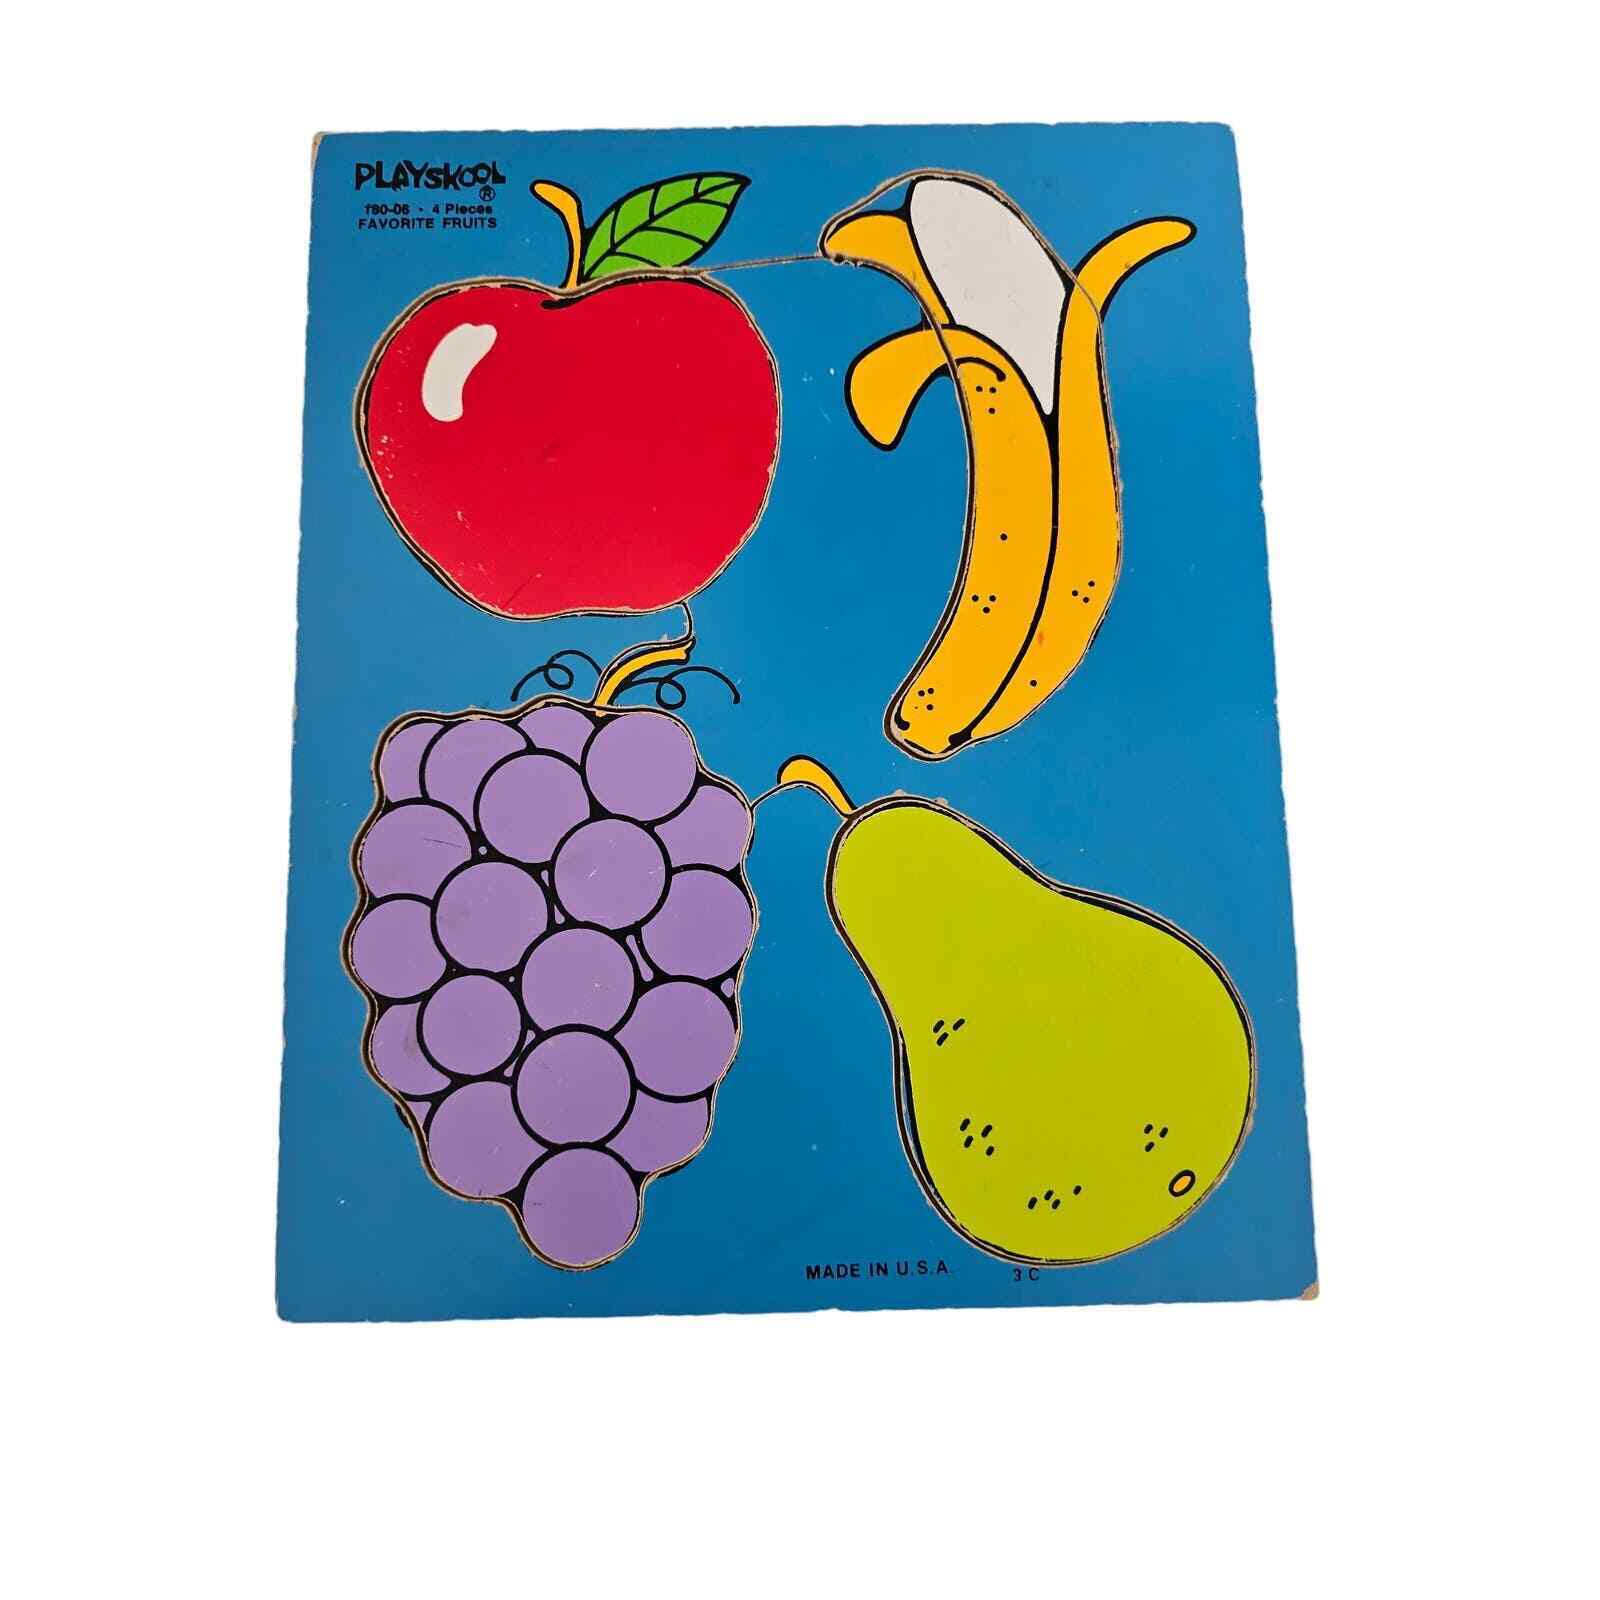 Vintage Playskool 1982 Favorite Fruits 4 Piece Children\'s Wooden Puzzle #180-06